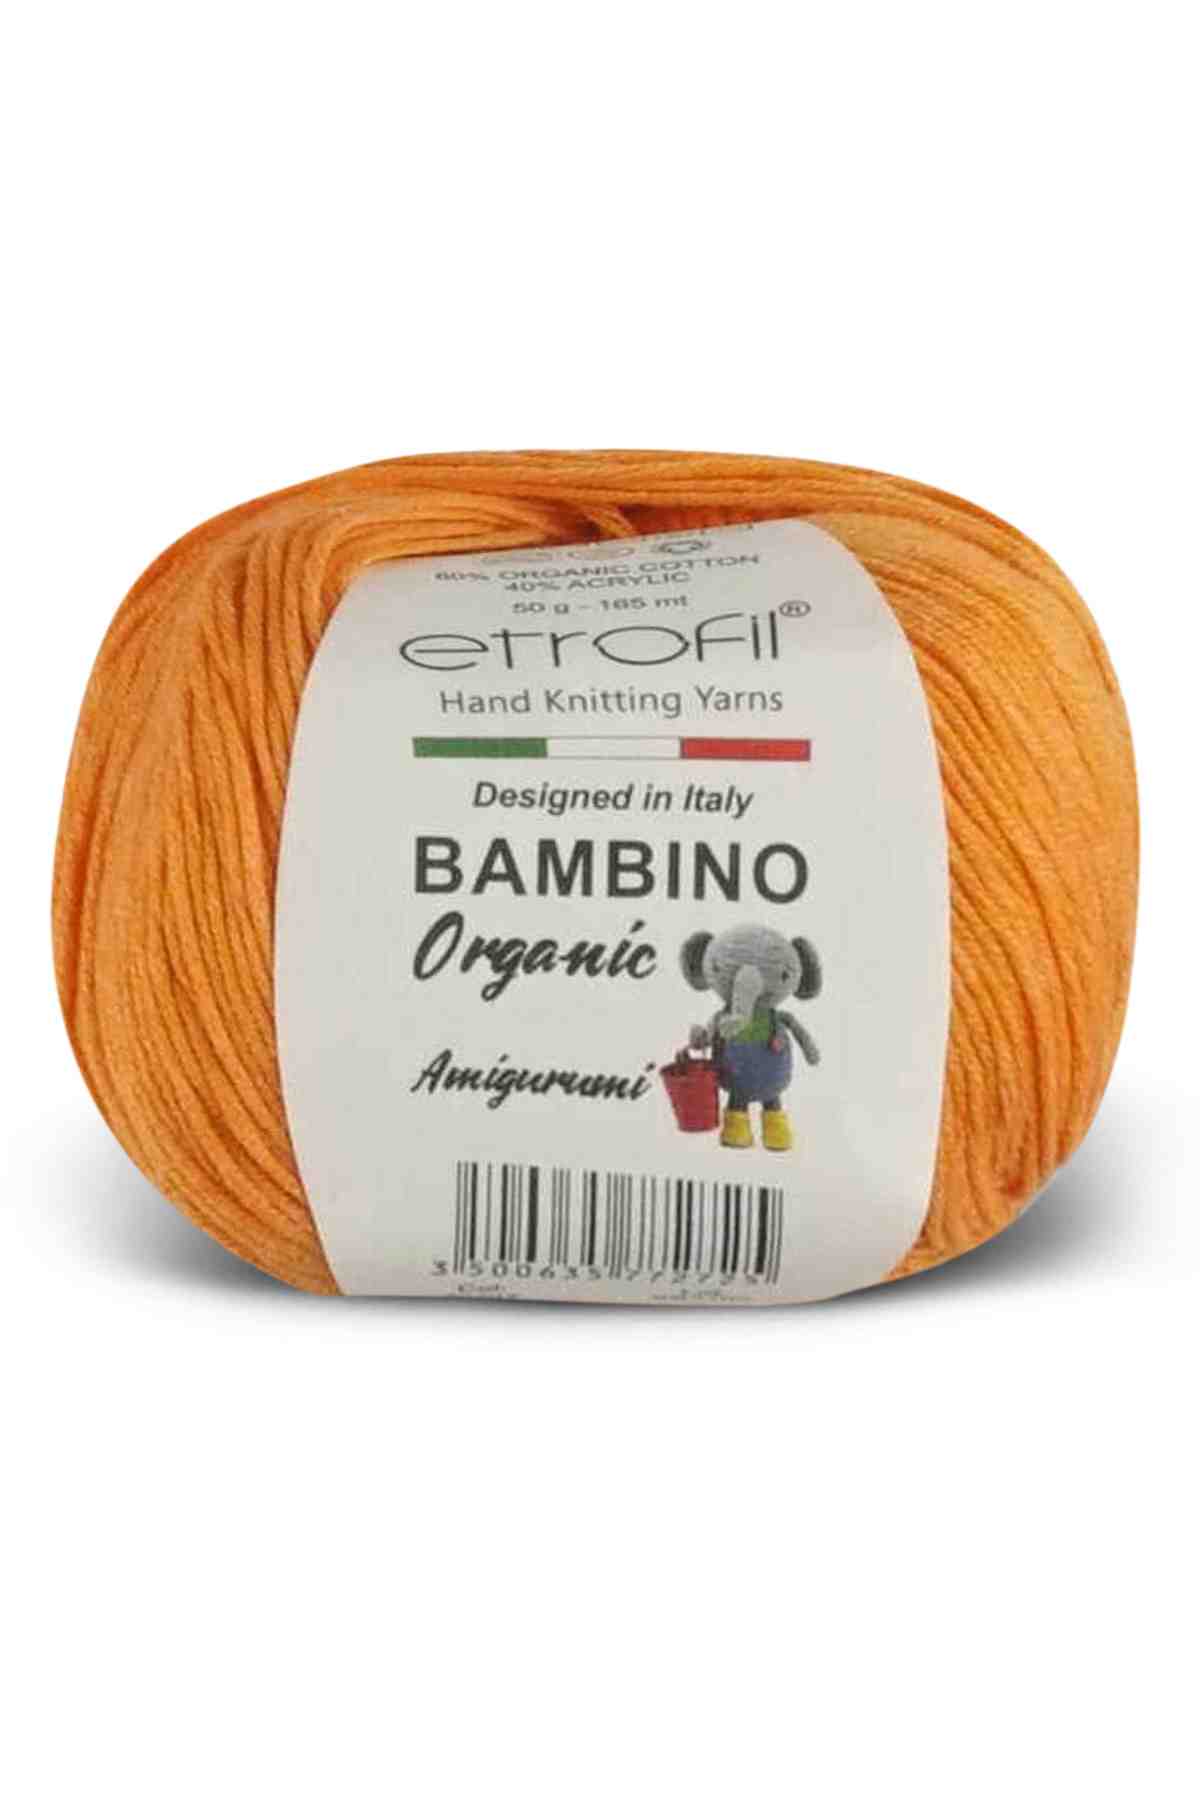 Etrofil Bambino Baby Organic Cotton Yarn